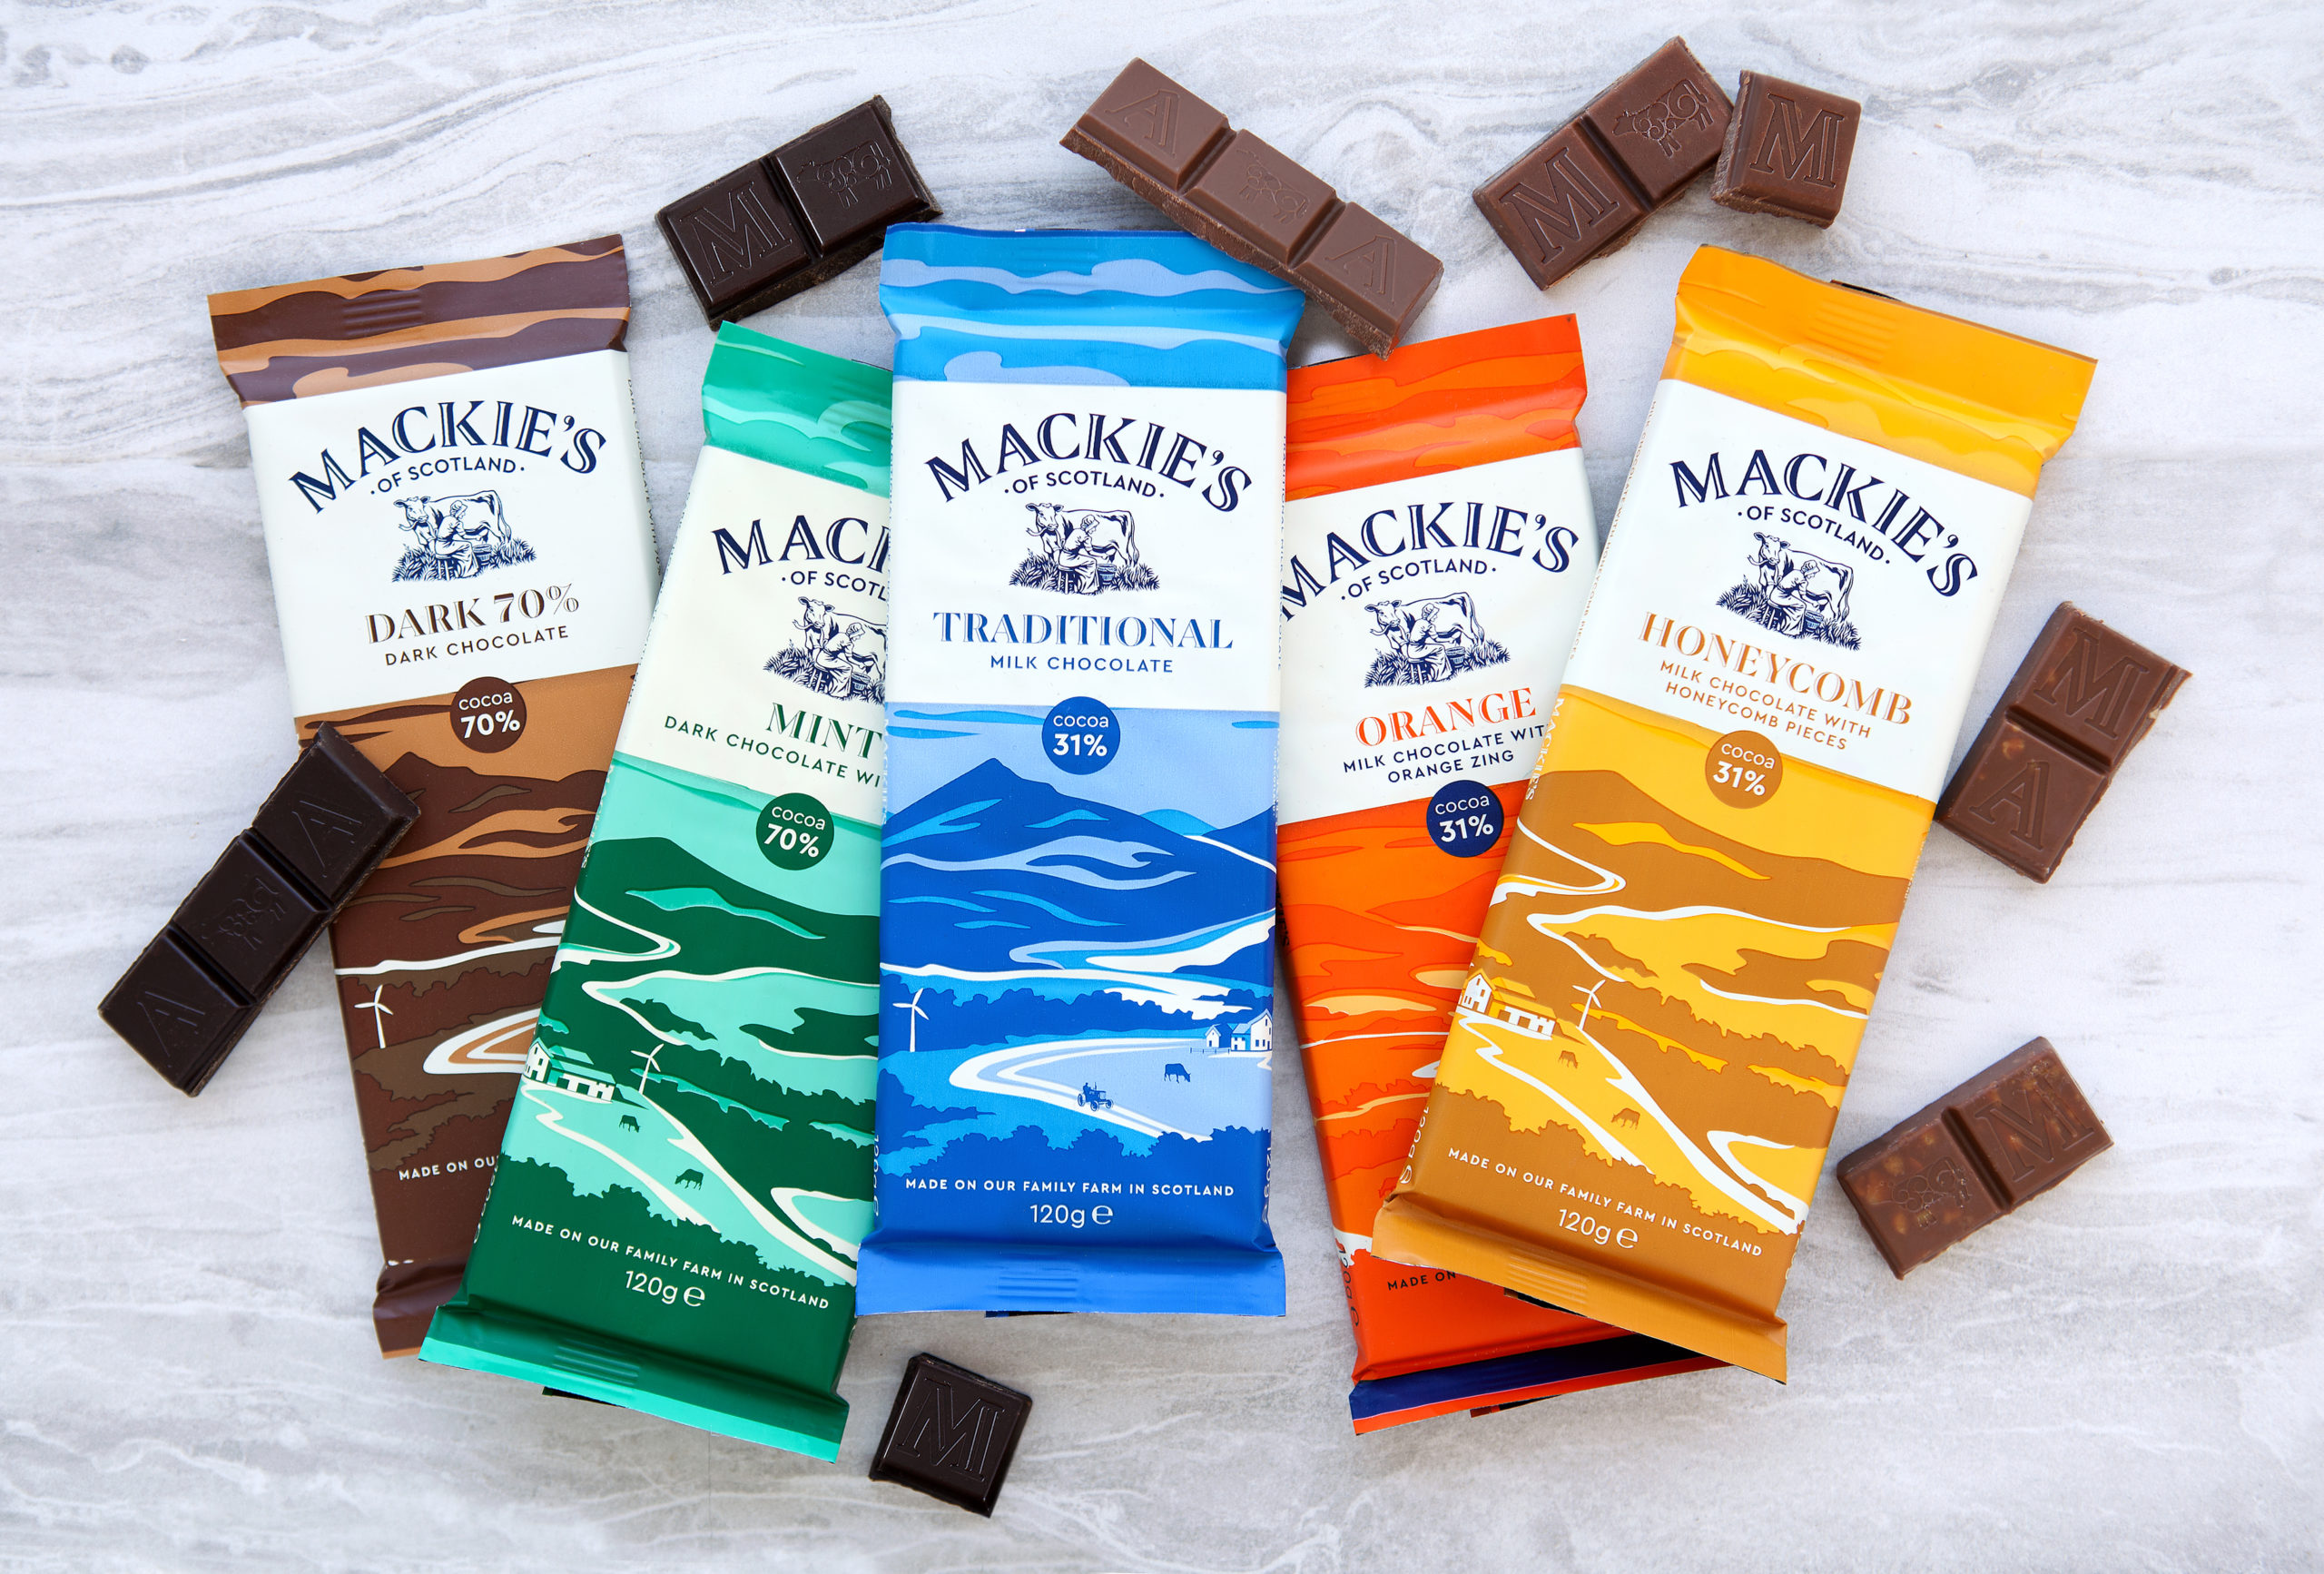 Mackies's chocolate bars in 5 flavours - milk, dark, orange, mint and honeycomb